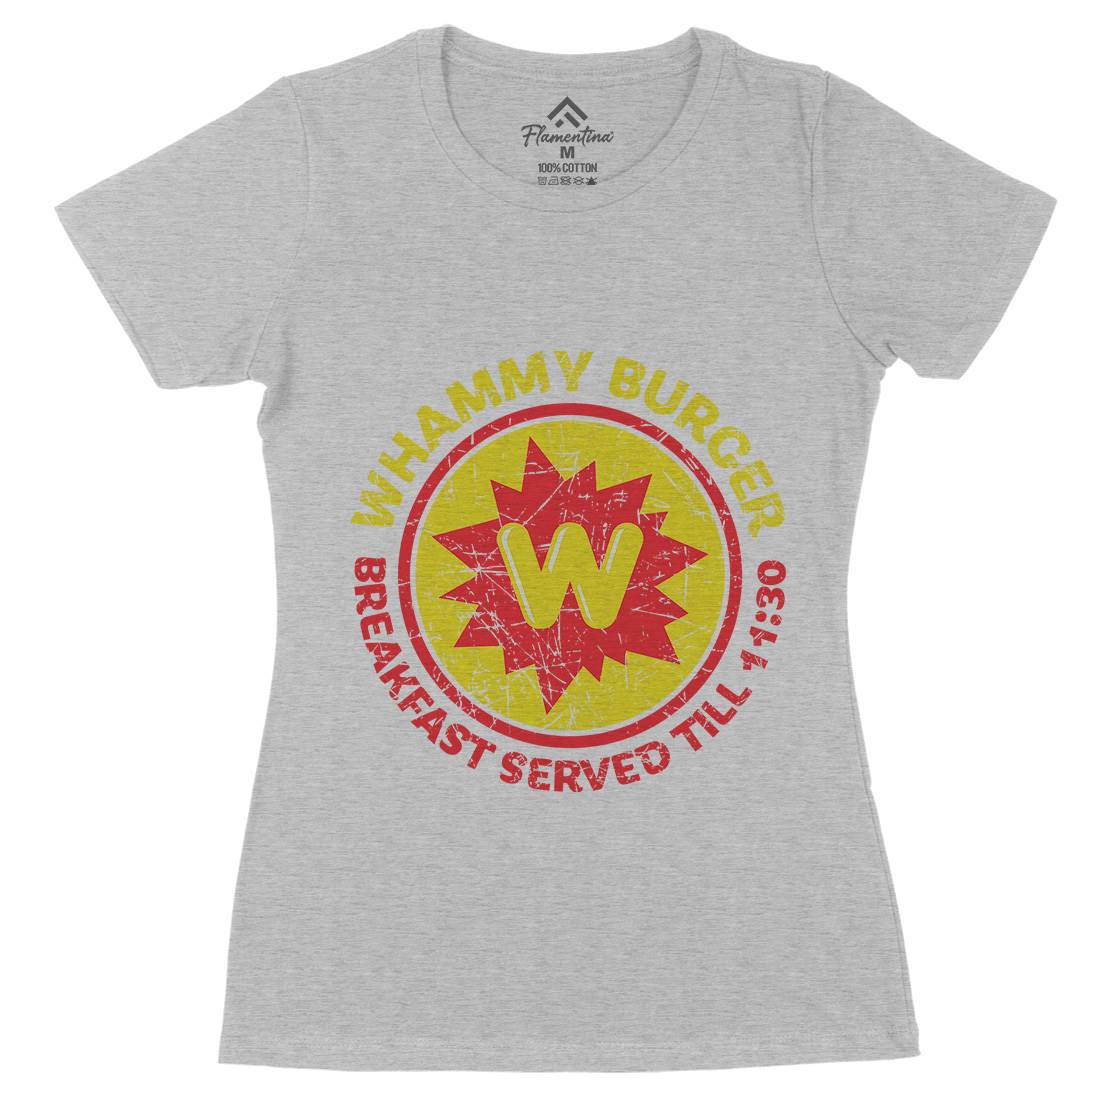 Whammy Burger Womens Organic Crew Neck T-Shirt Food D286